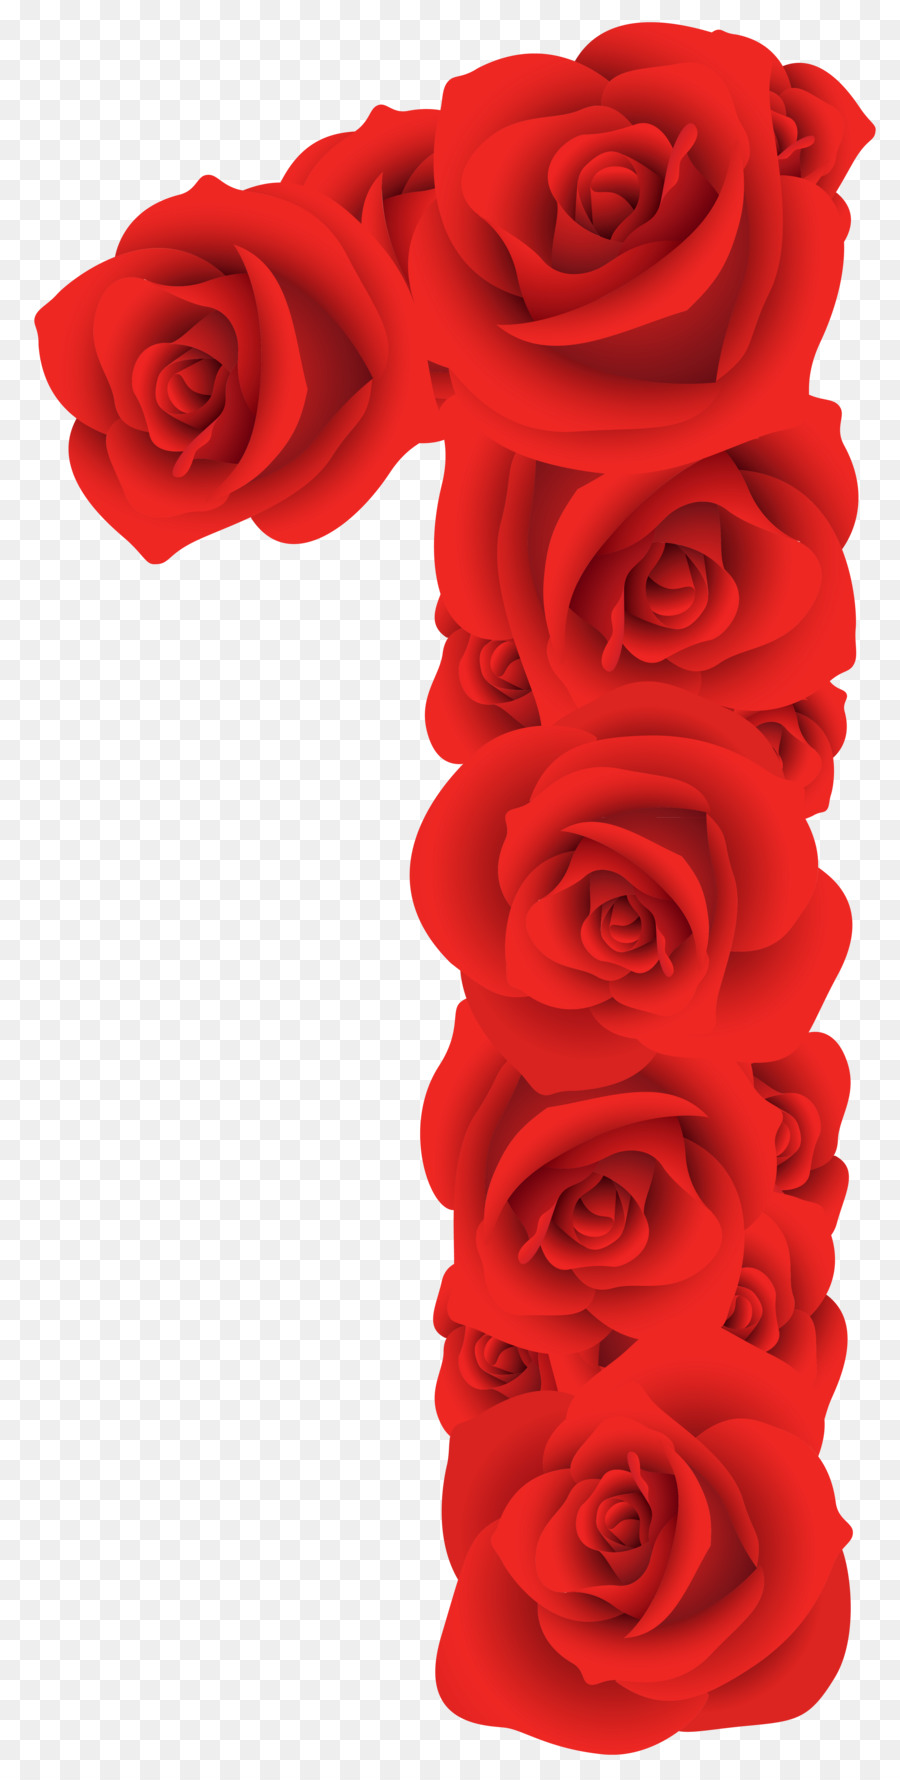 Rot Clip art - Dekorative rote rose